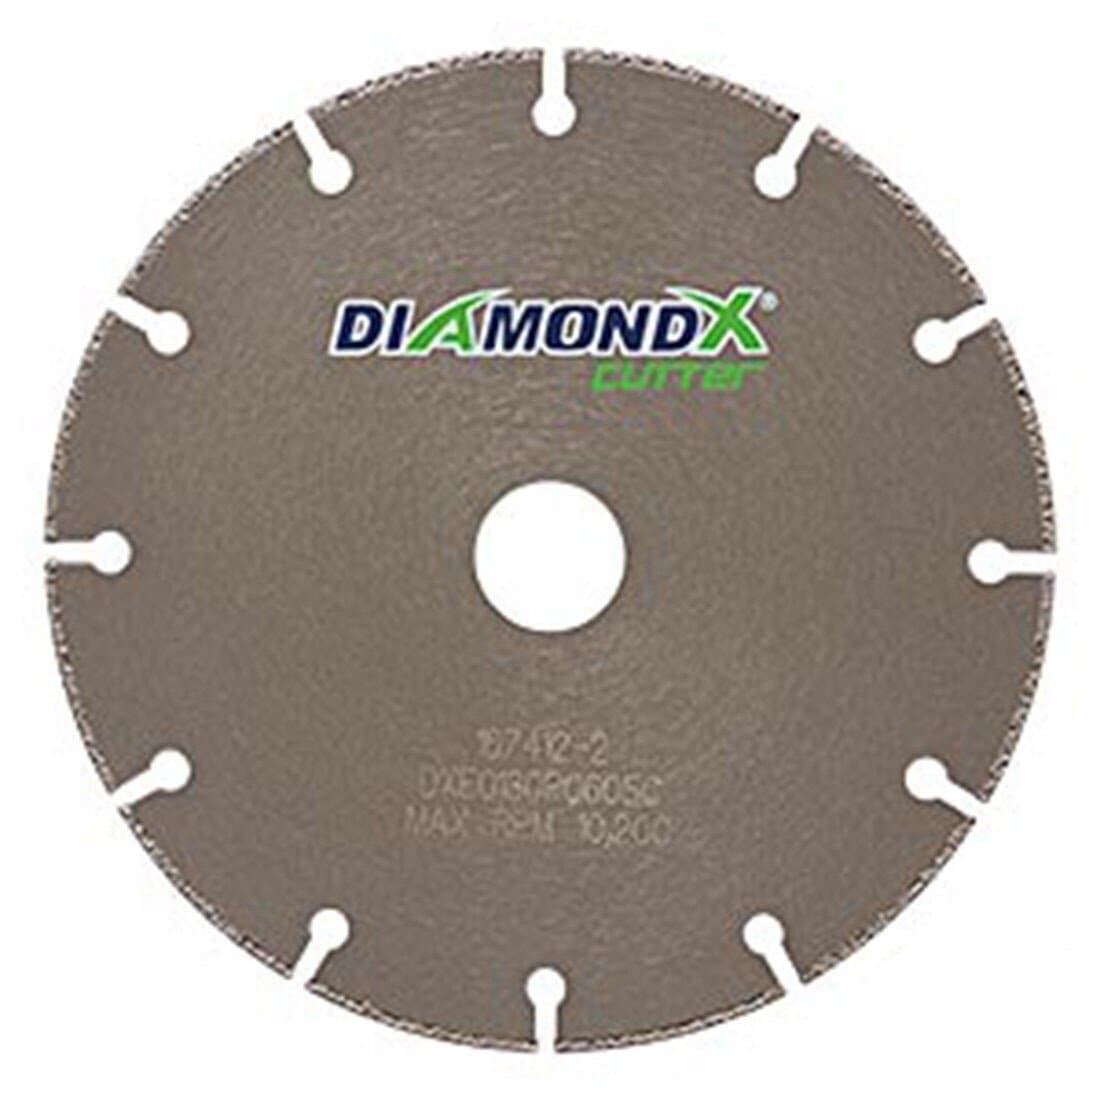 Diamond X Cutter Small Diameter